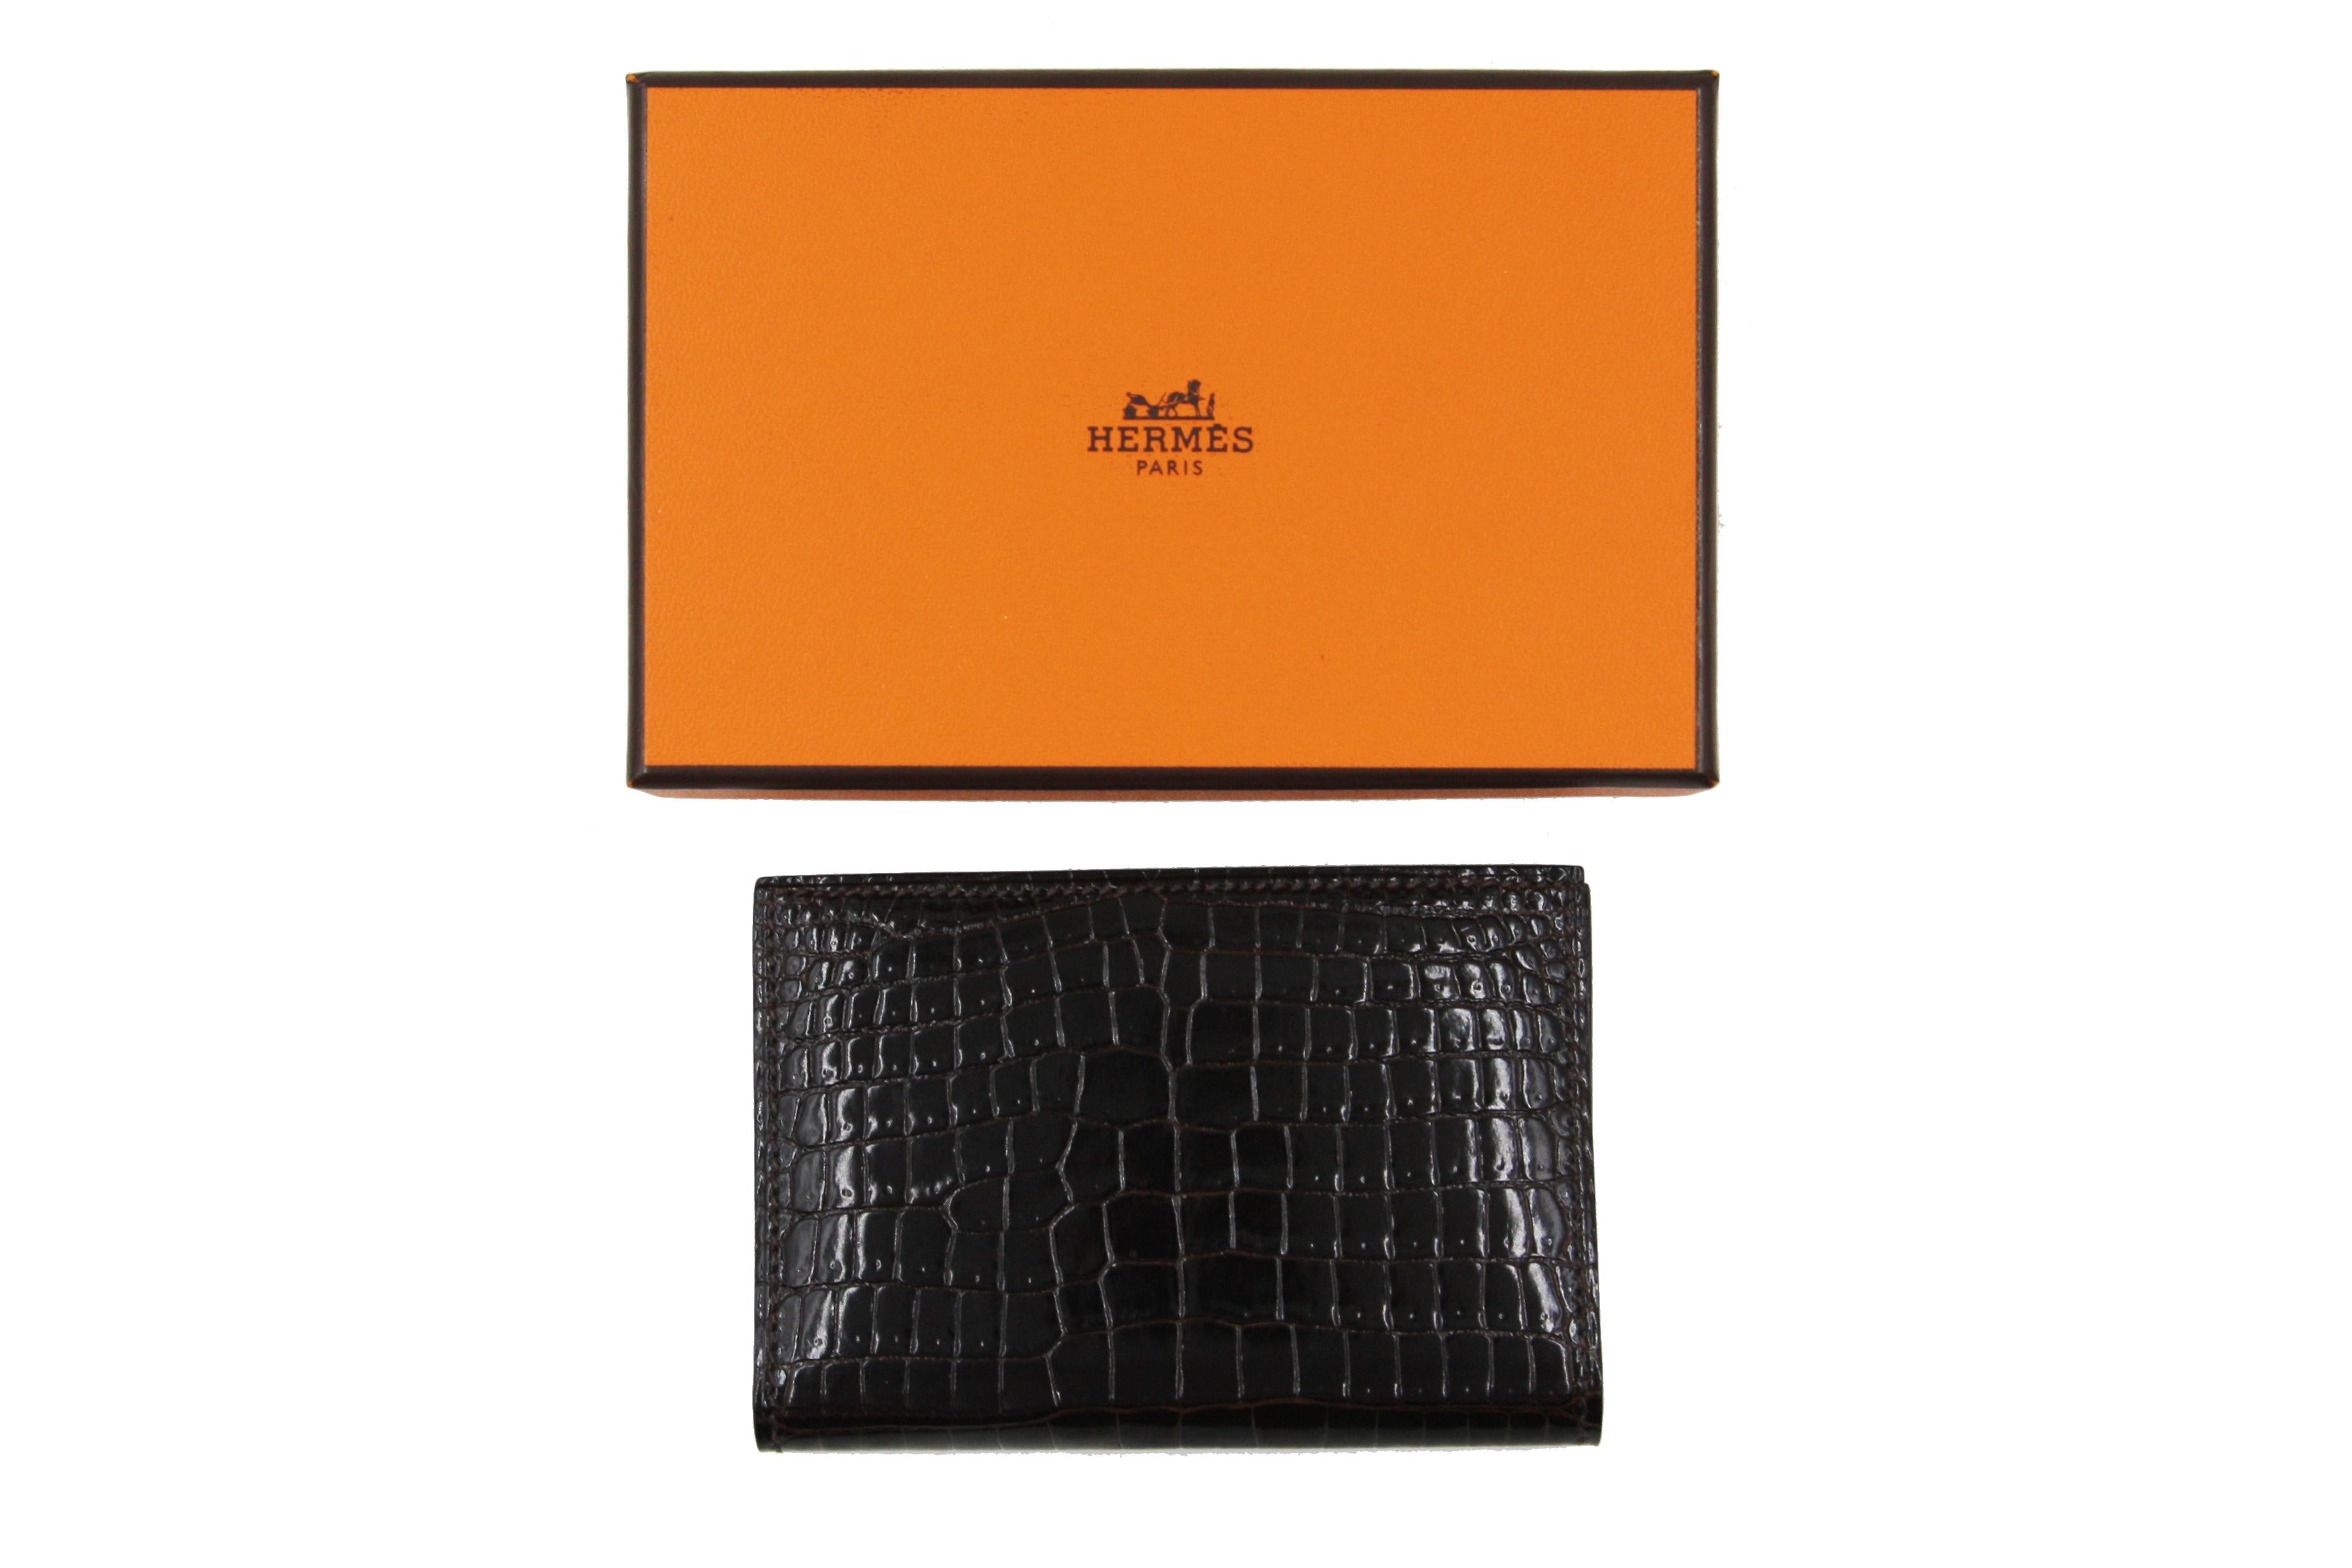 Hermes wallet/card holder in alligator with 4 credit card slots and 2 pockets

Measures 4